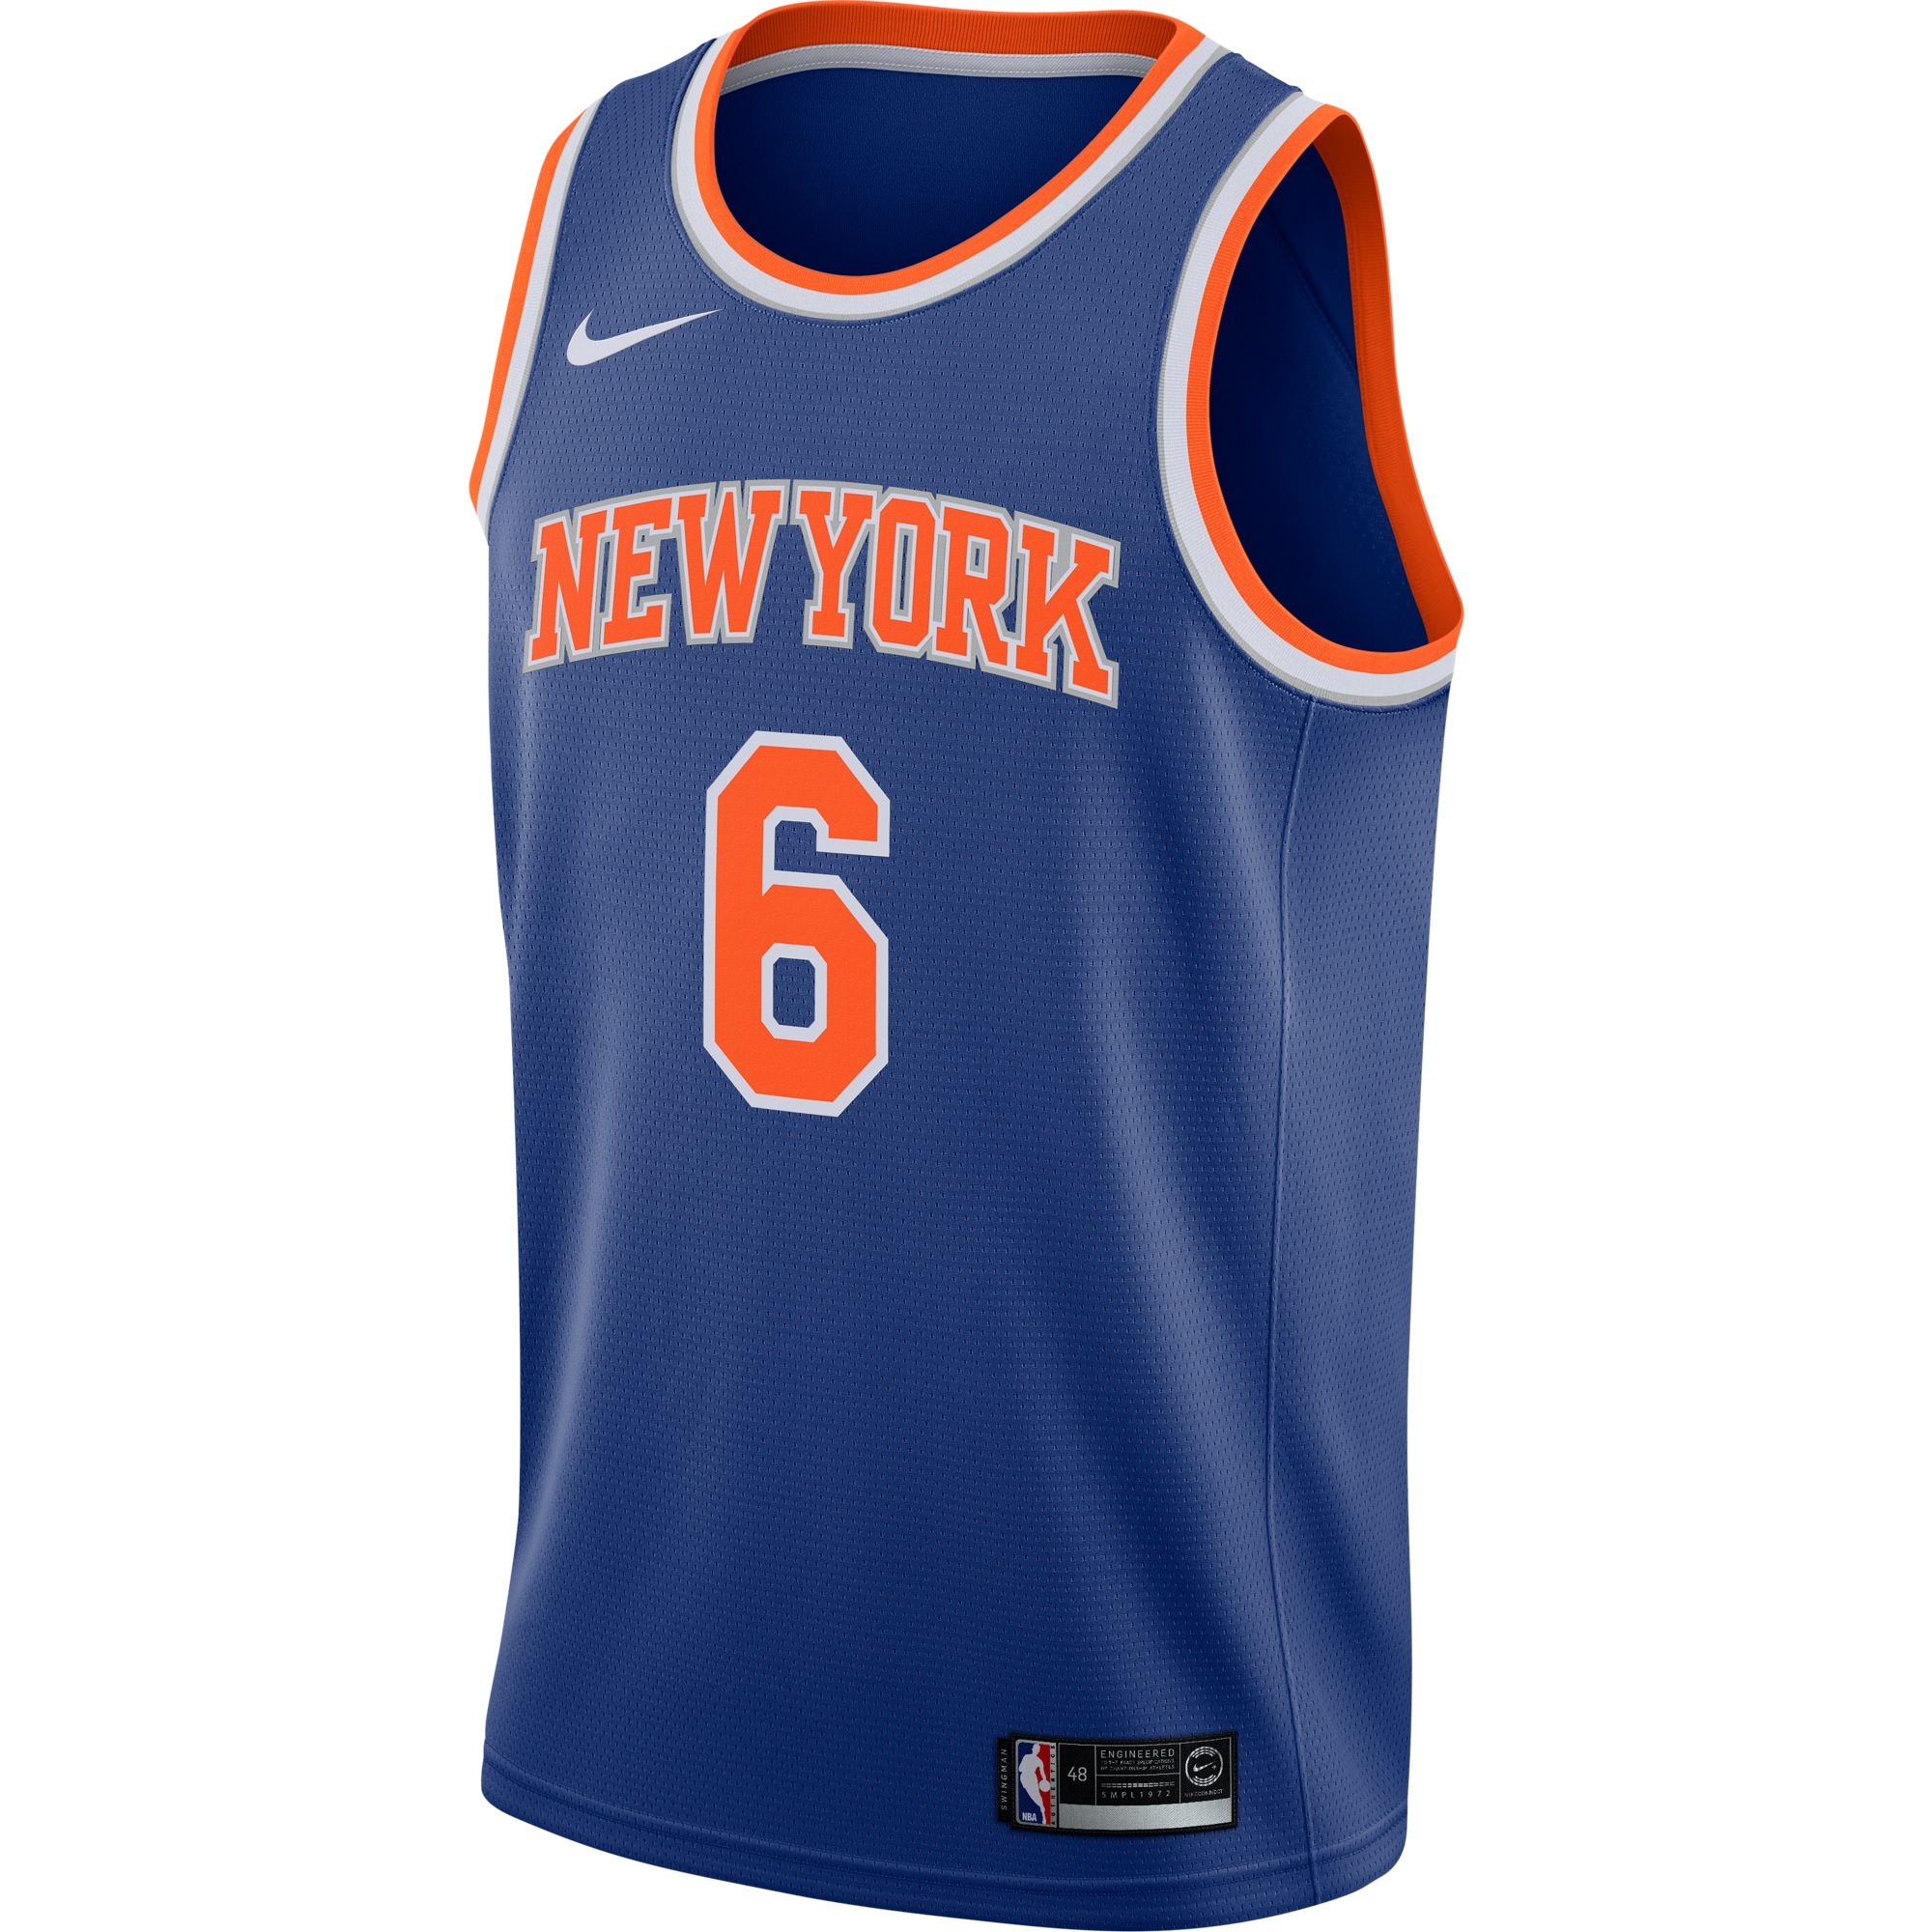 Kristaps Porzingis New York Knicks Nike Swingman Jersey Blue - Icon Edition - image 2 of 3